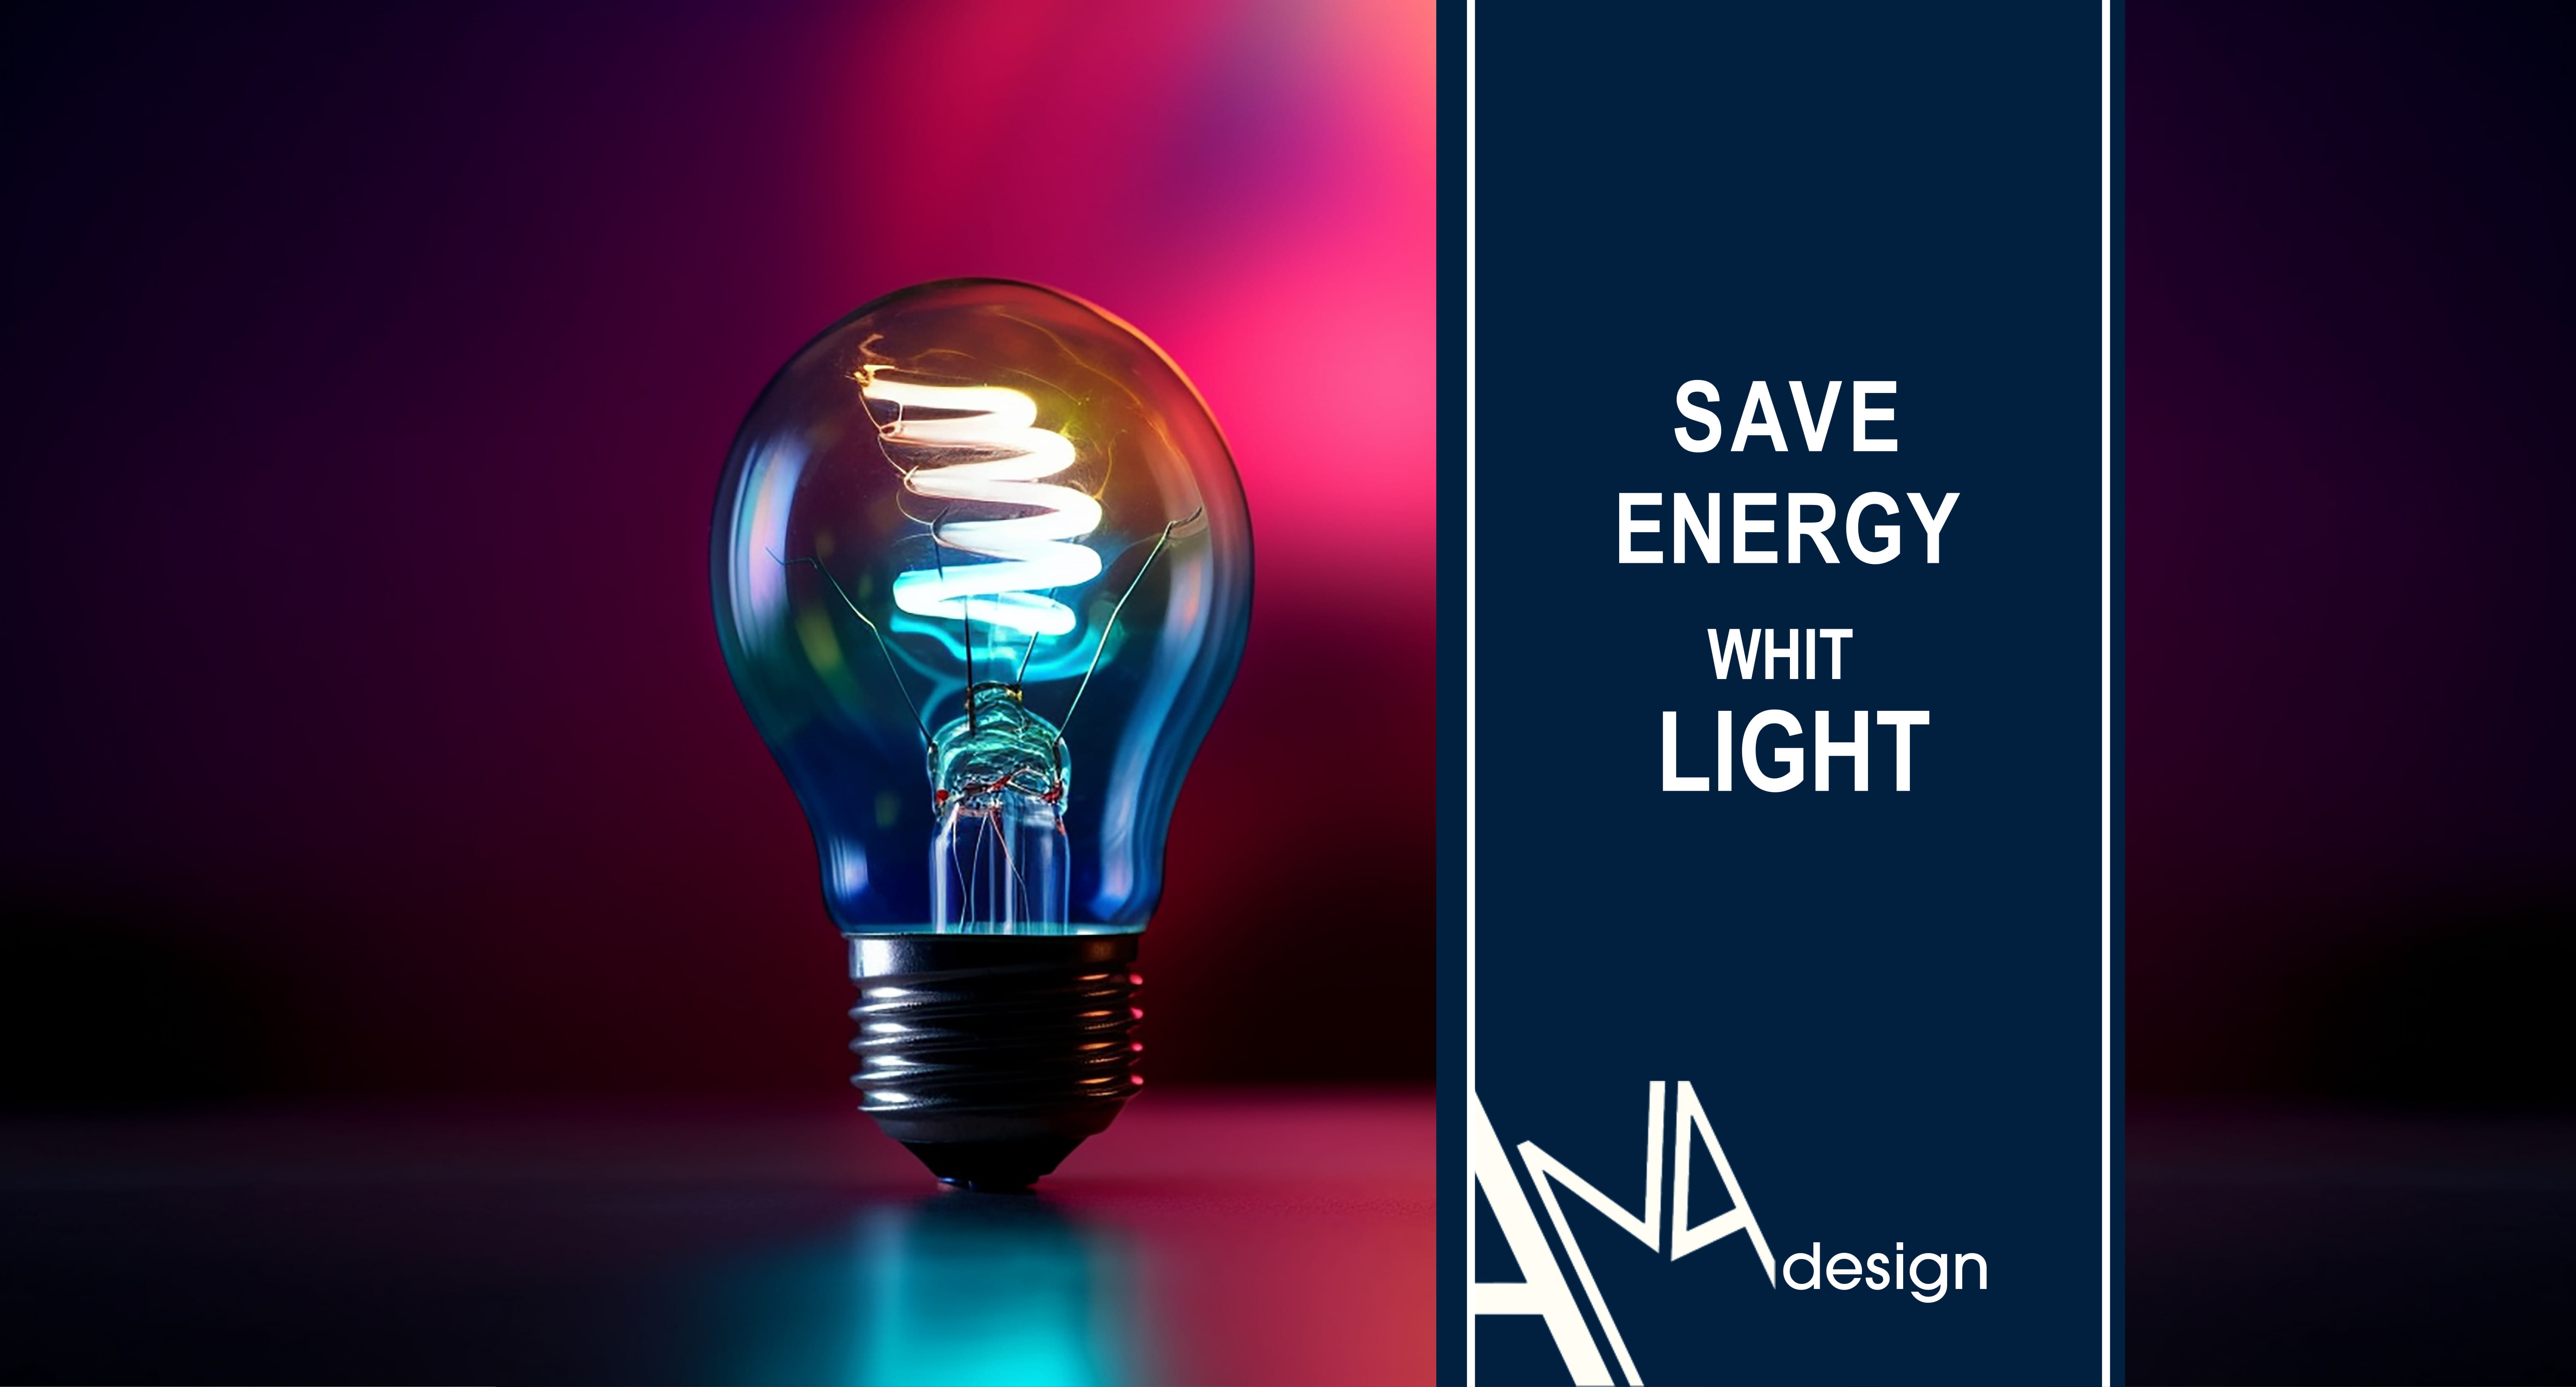 Am4 design save energy light